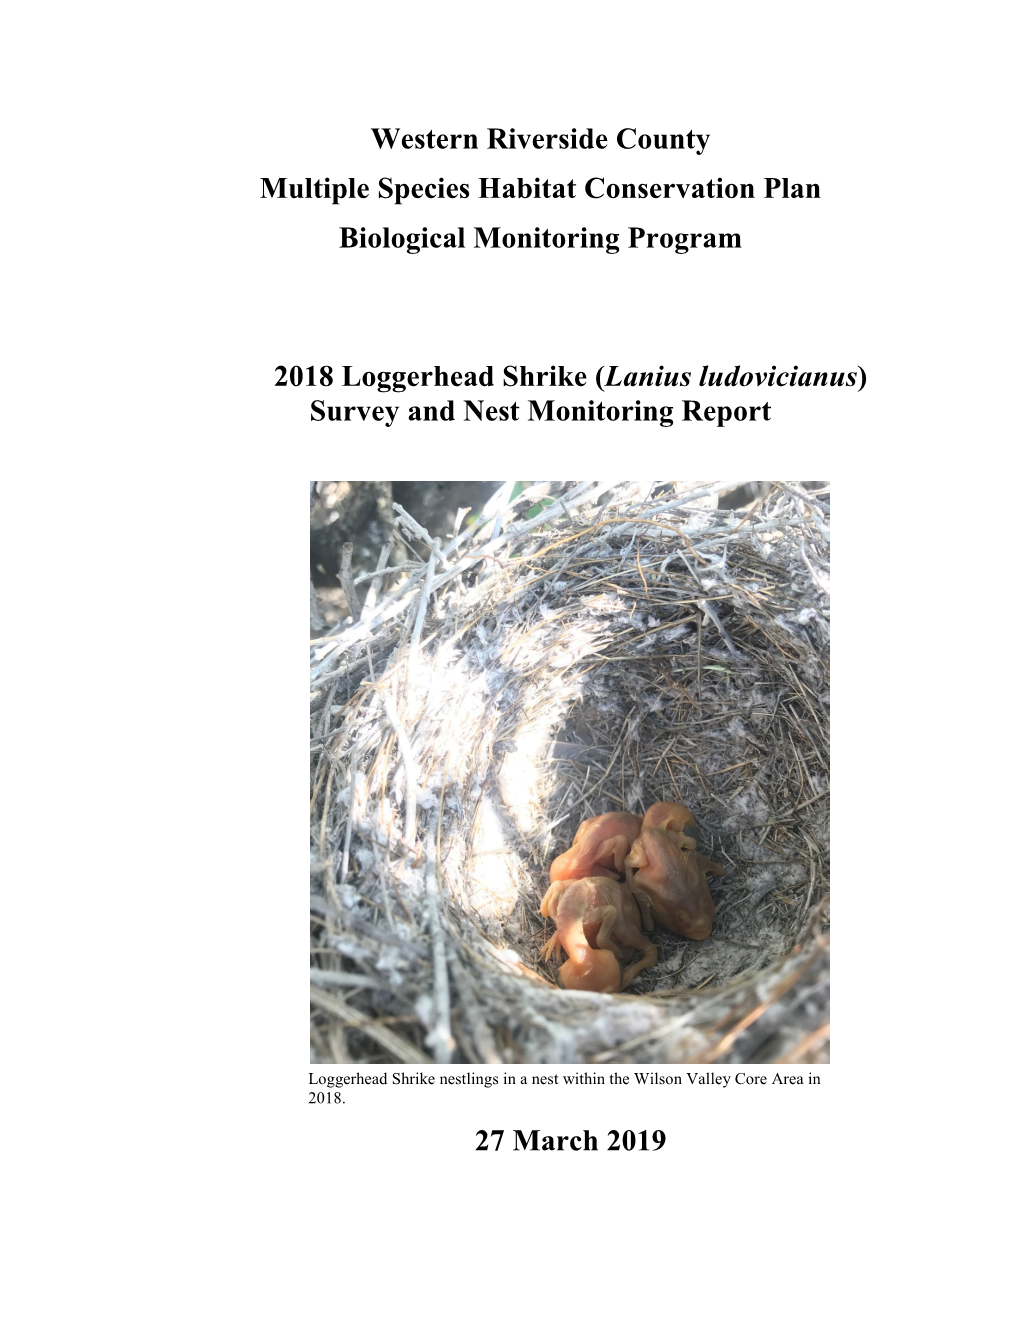 Loggerhead Shrike Survey Report 2018